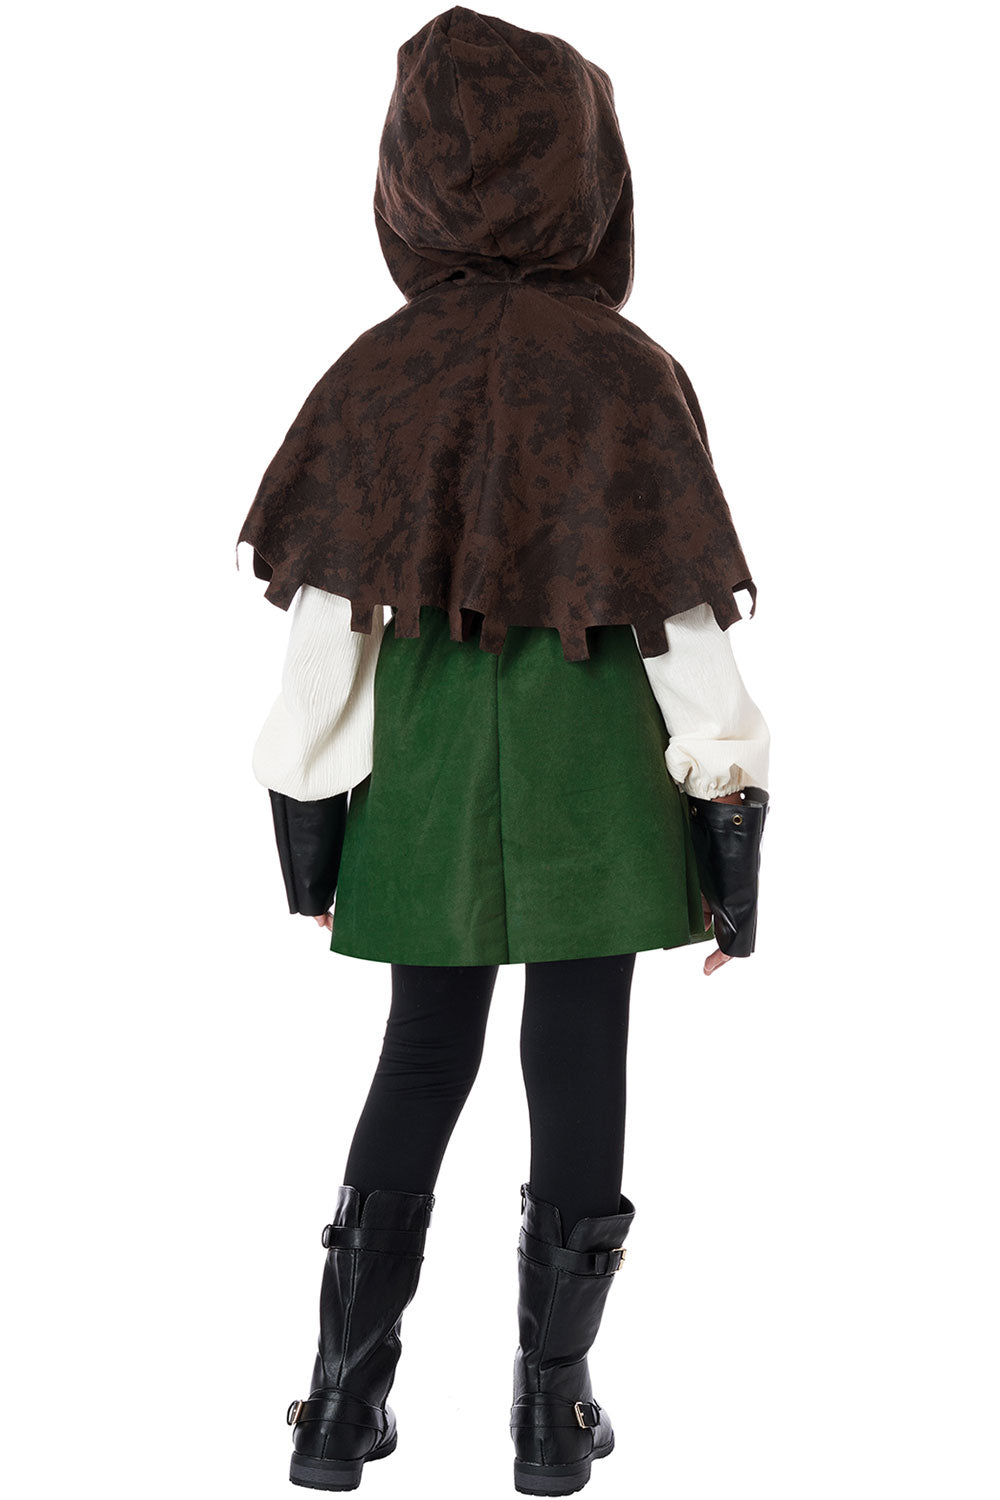 Robin, Princess Of Thieves / Child California Costume 3021-162